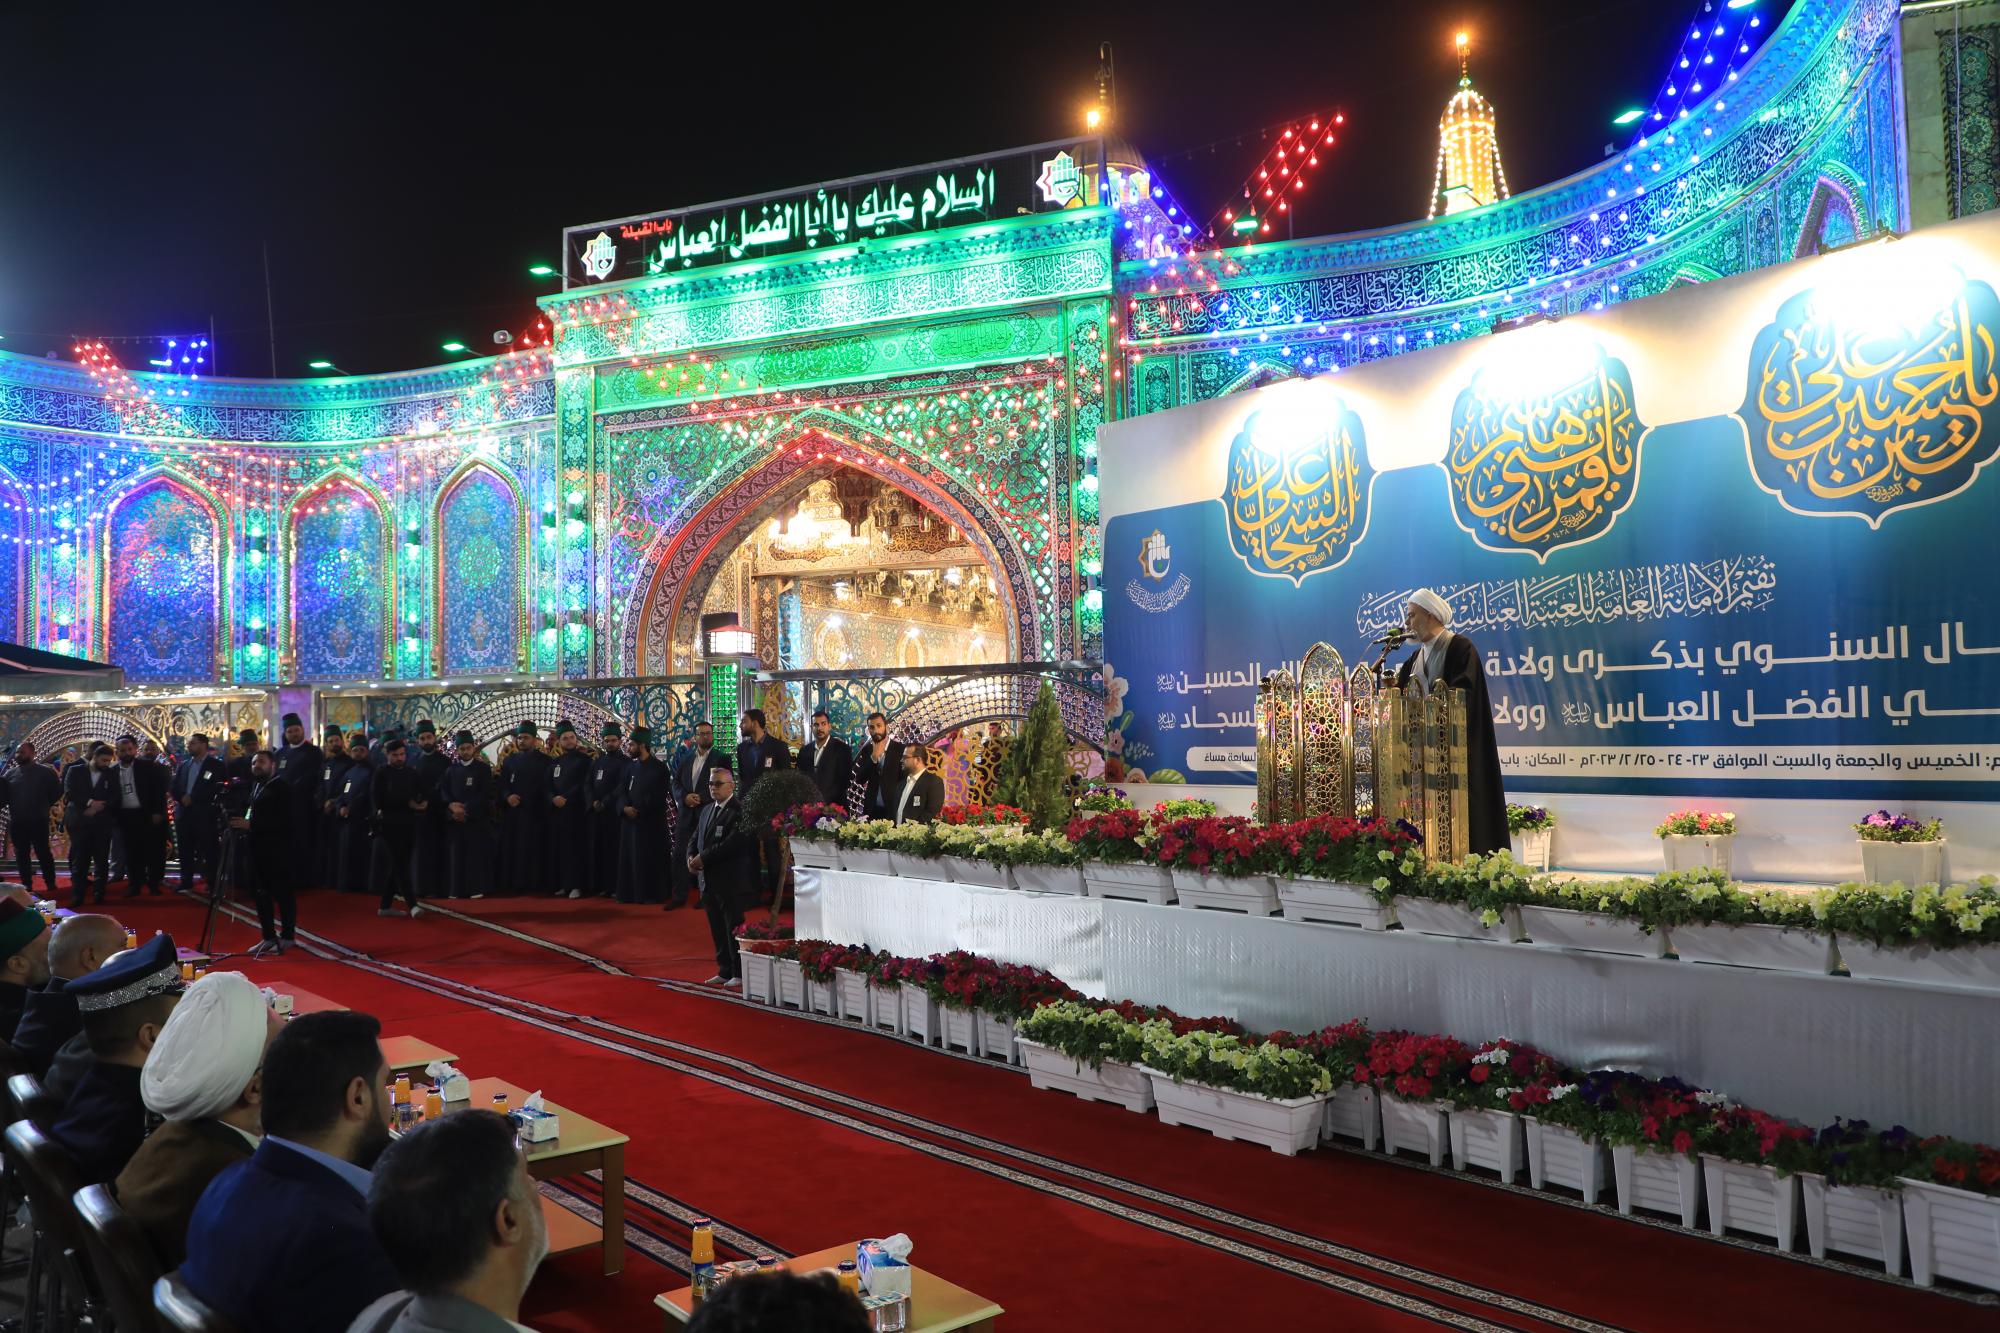 Al-Abbas shrine organizes celebration on occasion of birth anniversaries of Imams born in Shaban